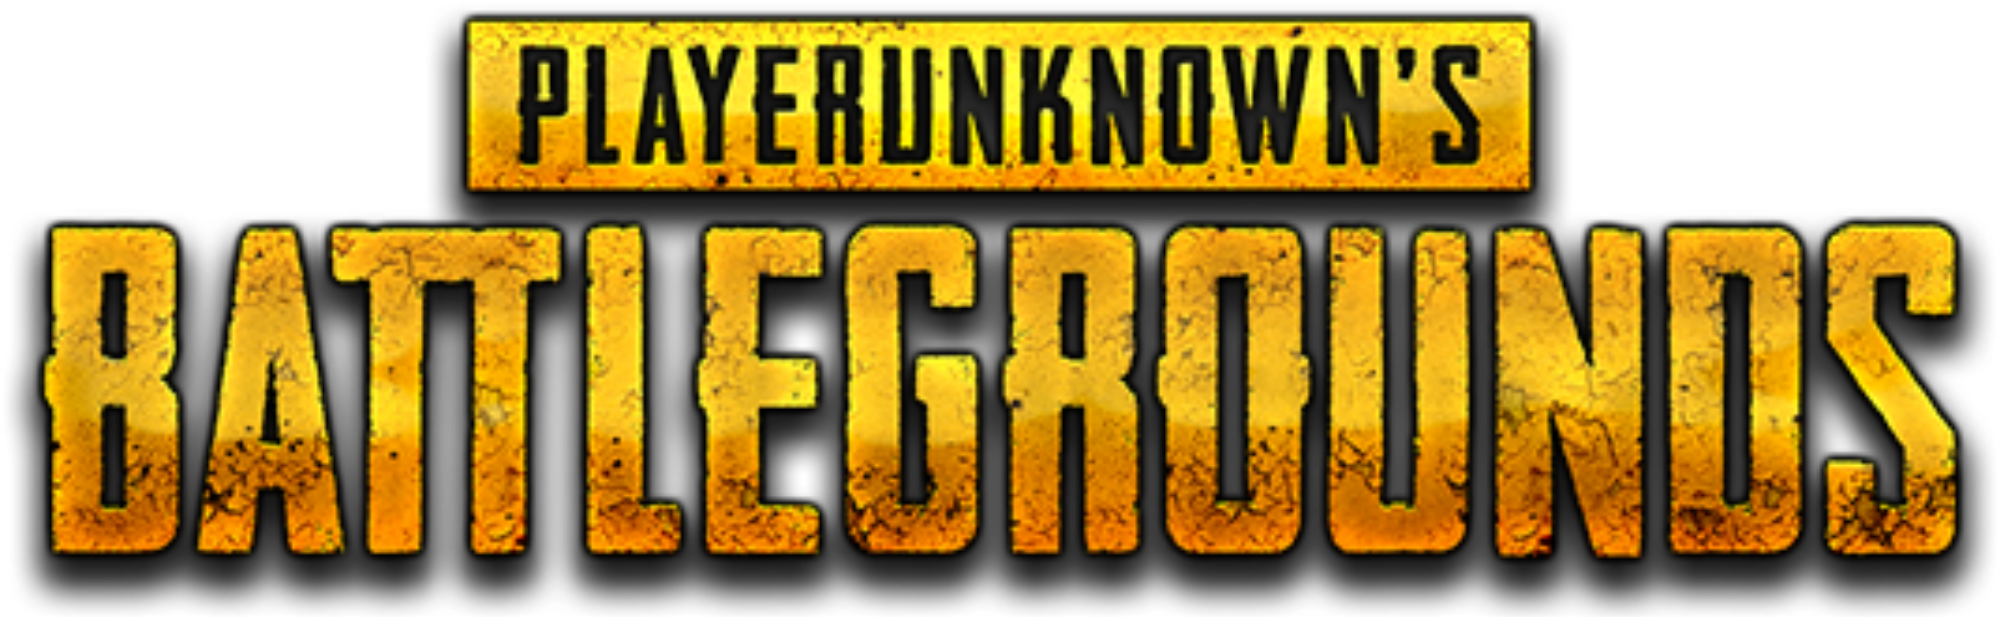 Playerunknown’s Battlegrounds Logo PNG Image